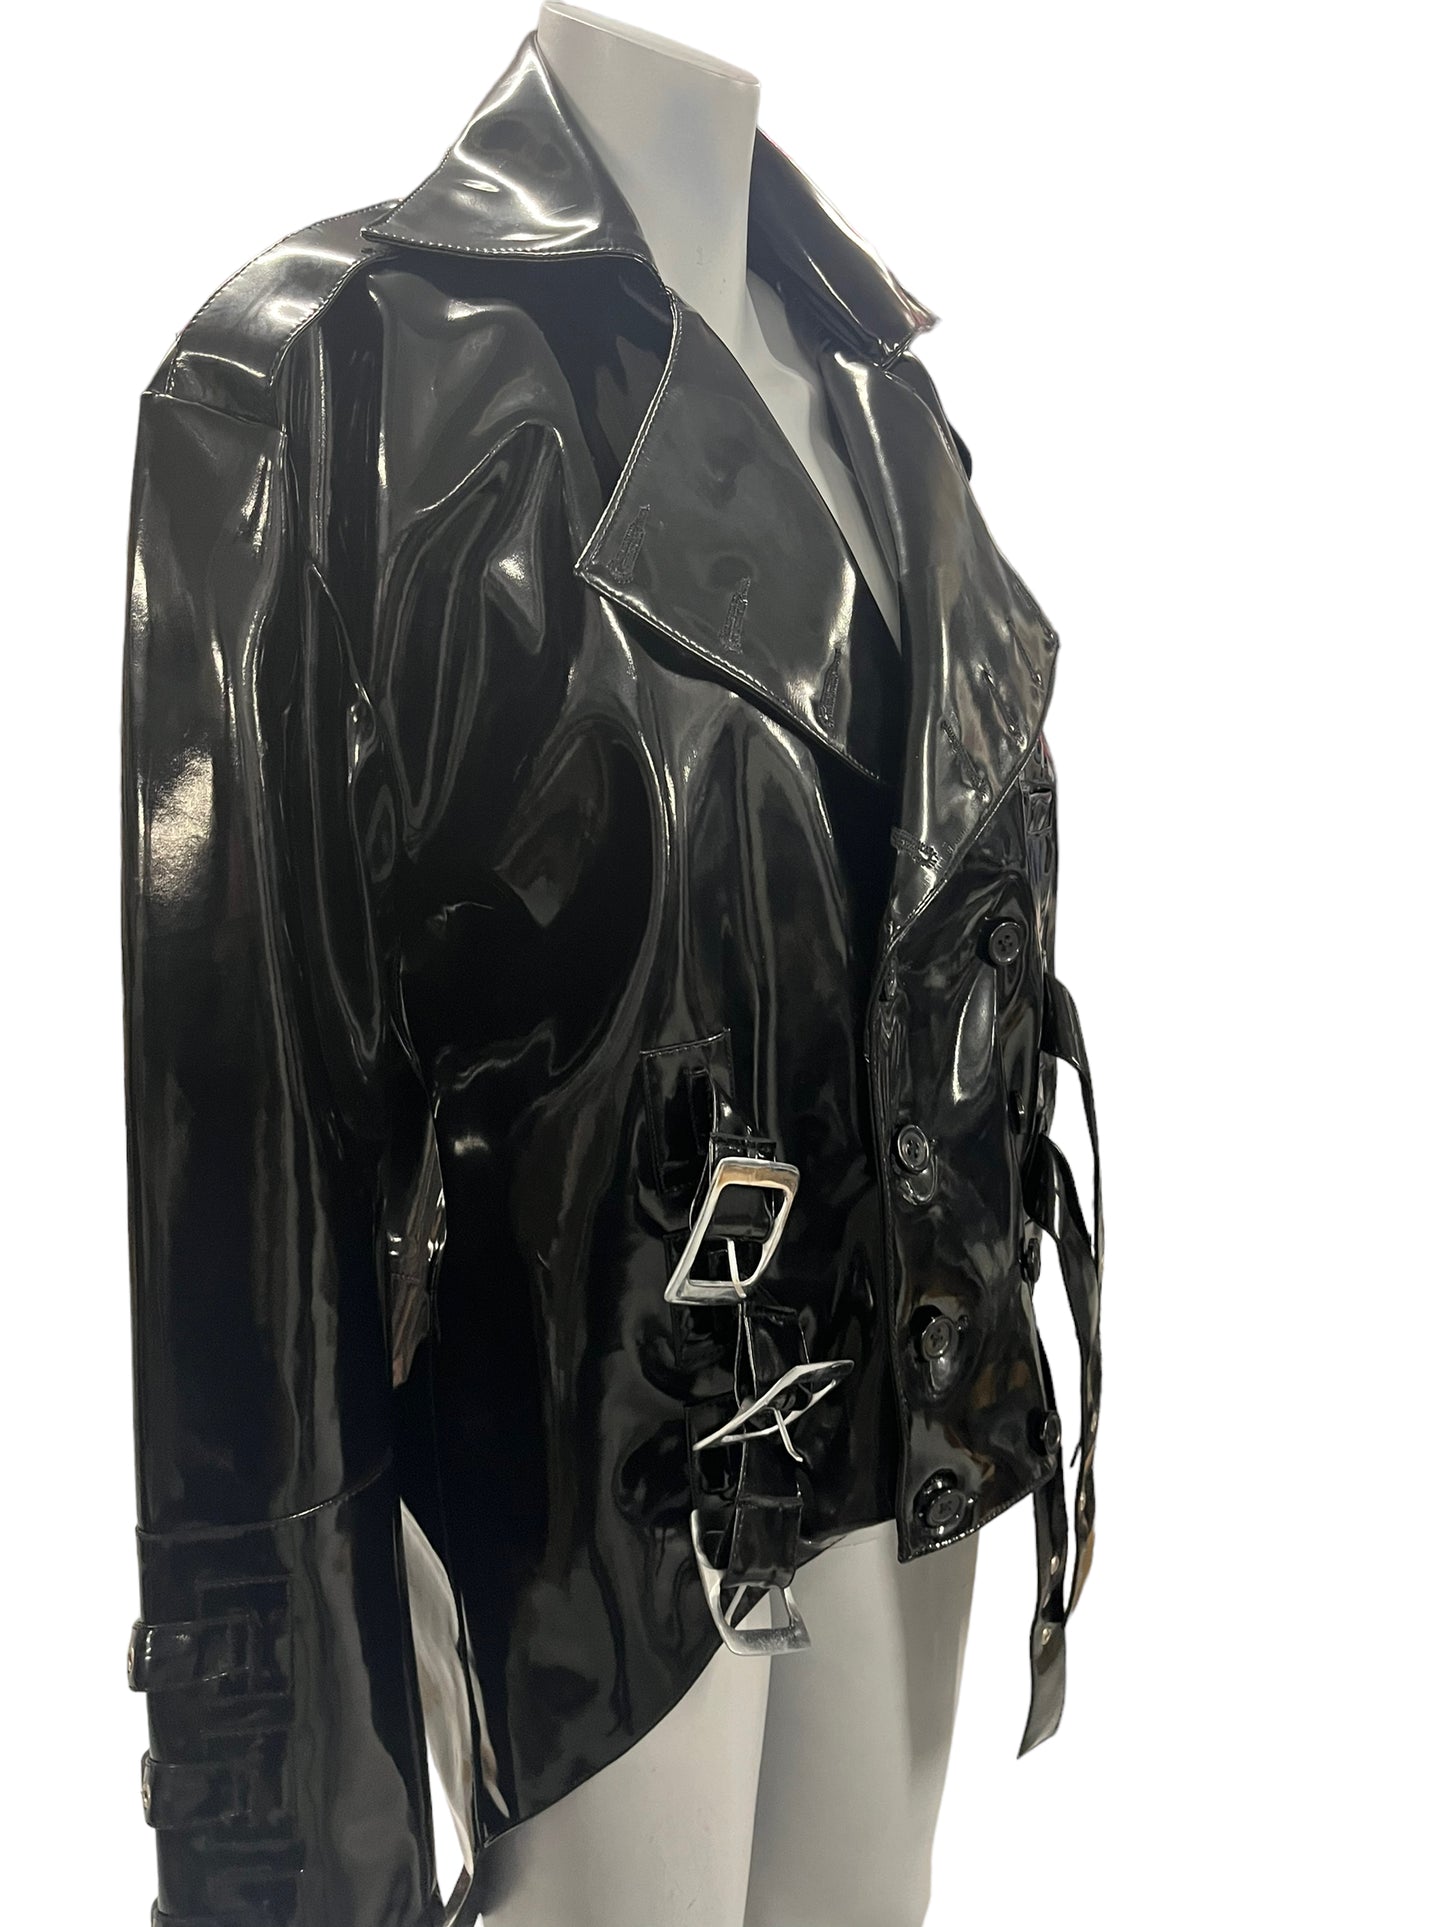 Fashion World - LL94 - Provocative Black Jacket - Size S